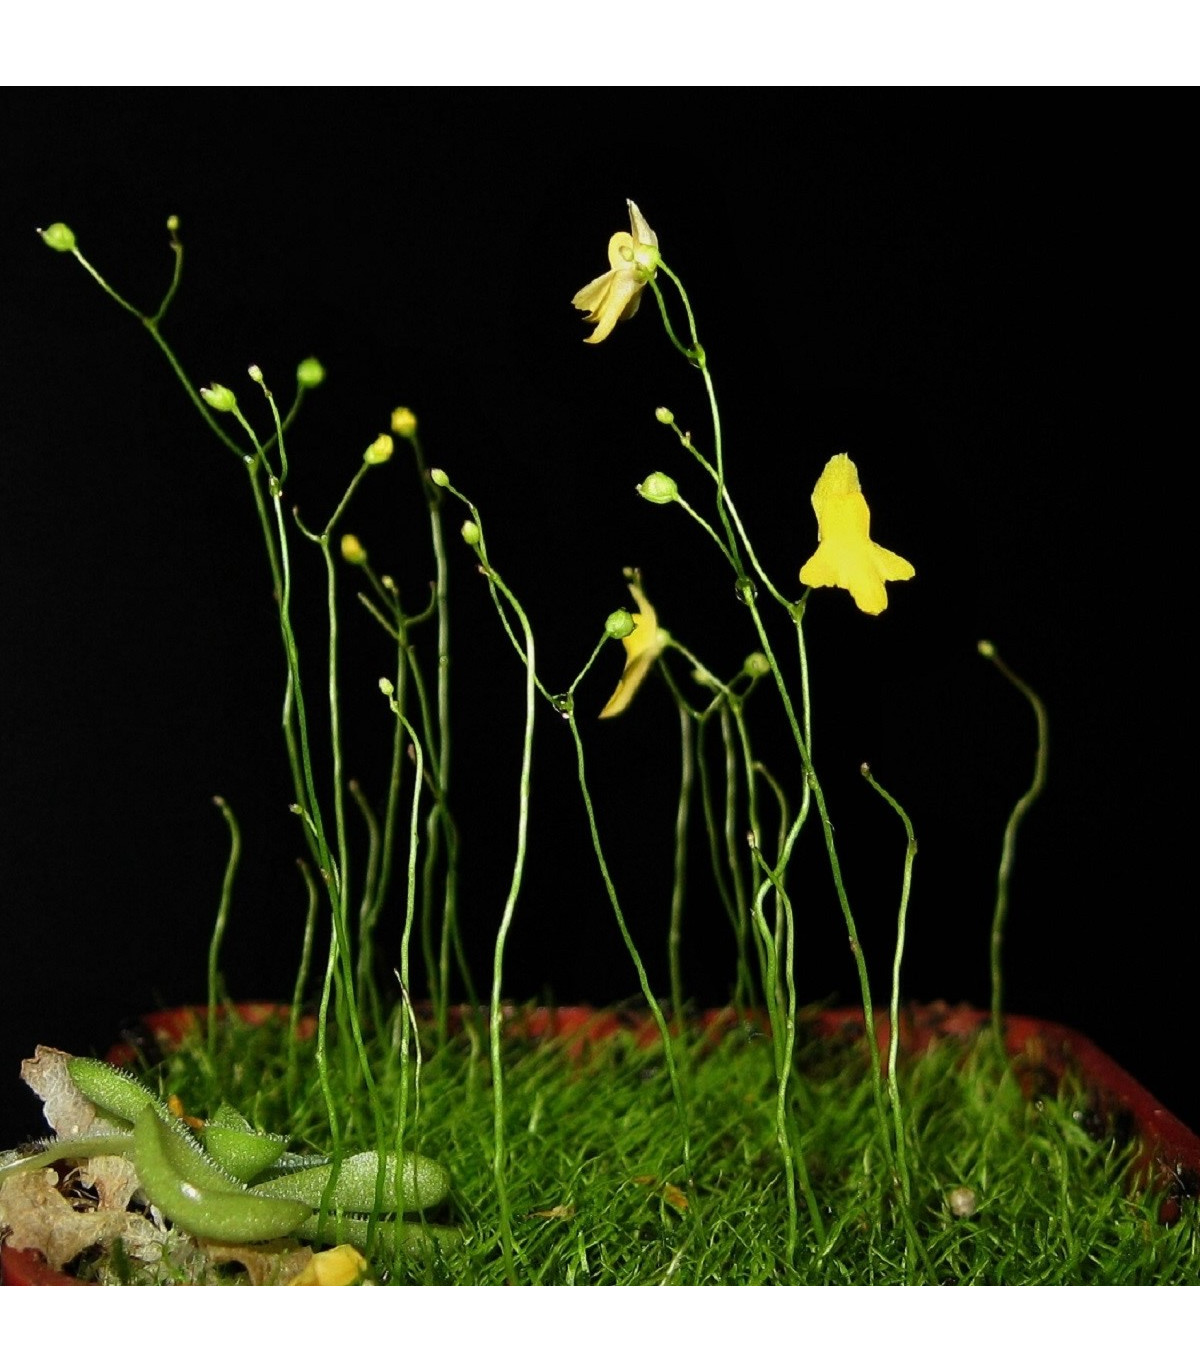 Bublinatka šidlovitá - Utricularia subulata - semená bublinatky - 15 ks